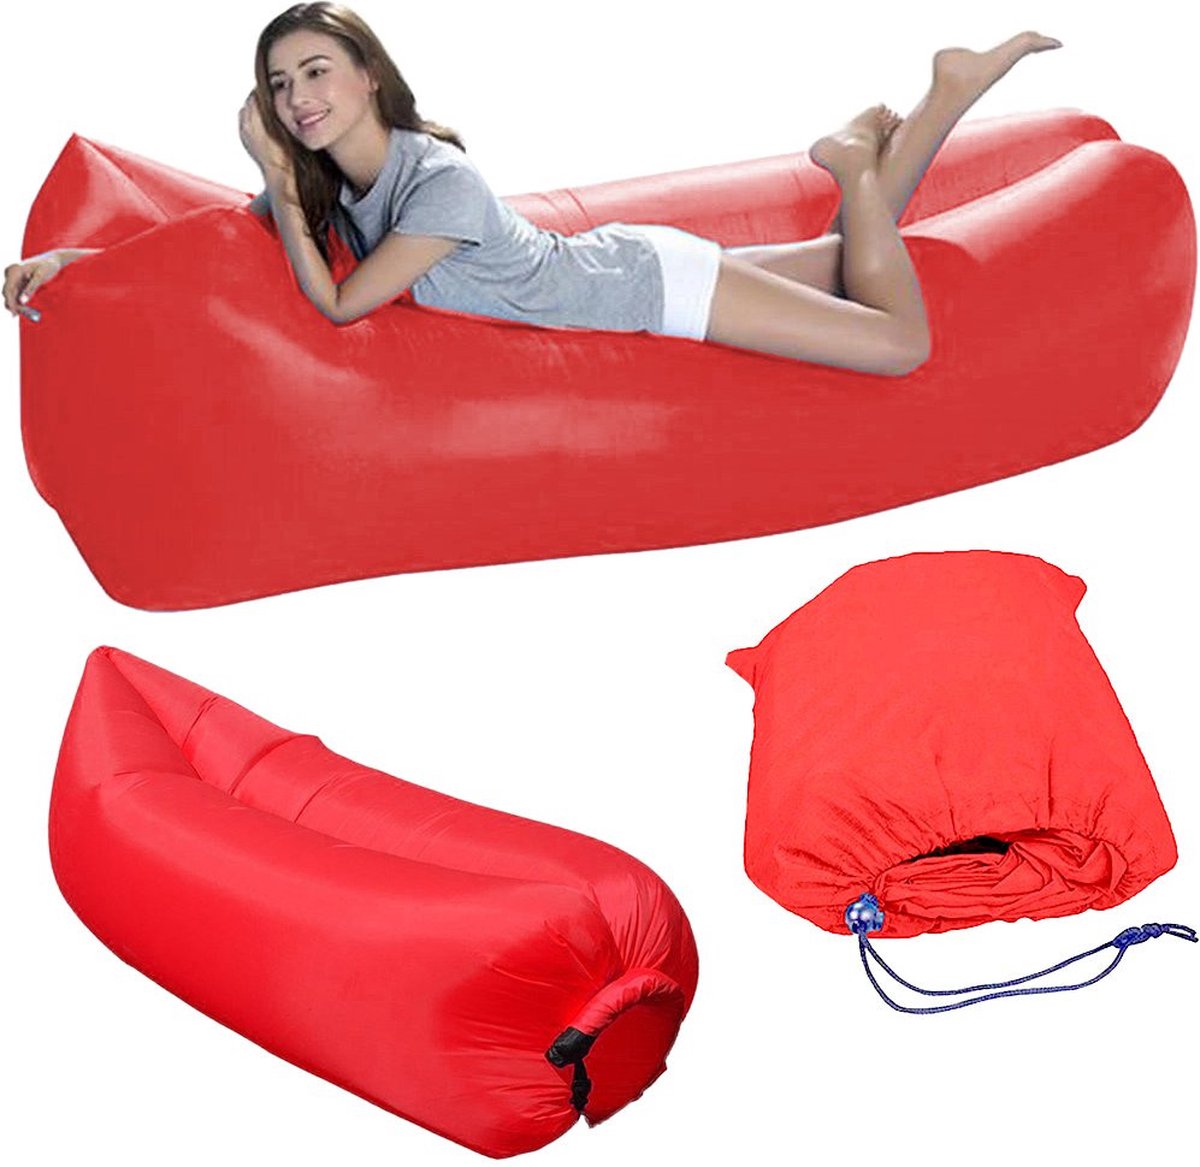 Opblaasbare zitzak rood - Volwassenen luchtbed - Air lounger - Luchtzak 220x70 cm - Ligzak voor op het strand